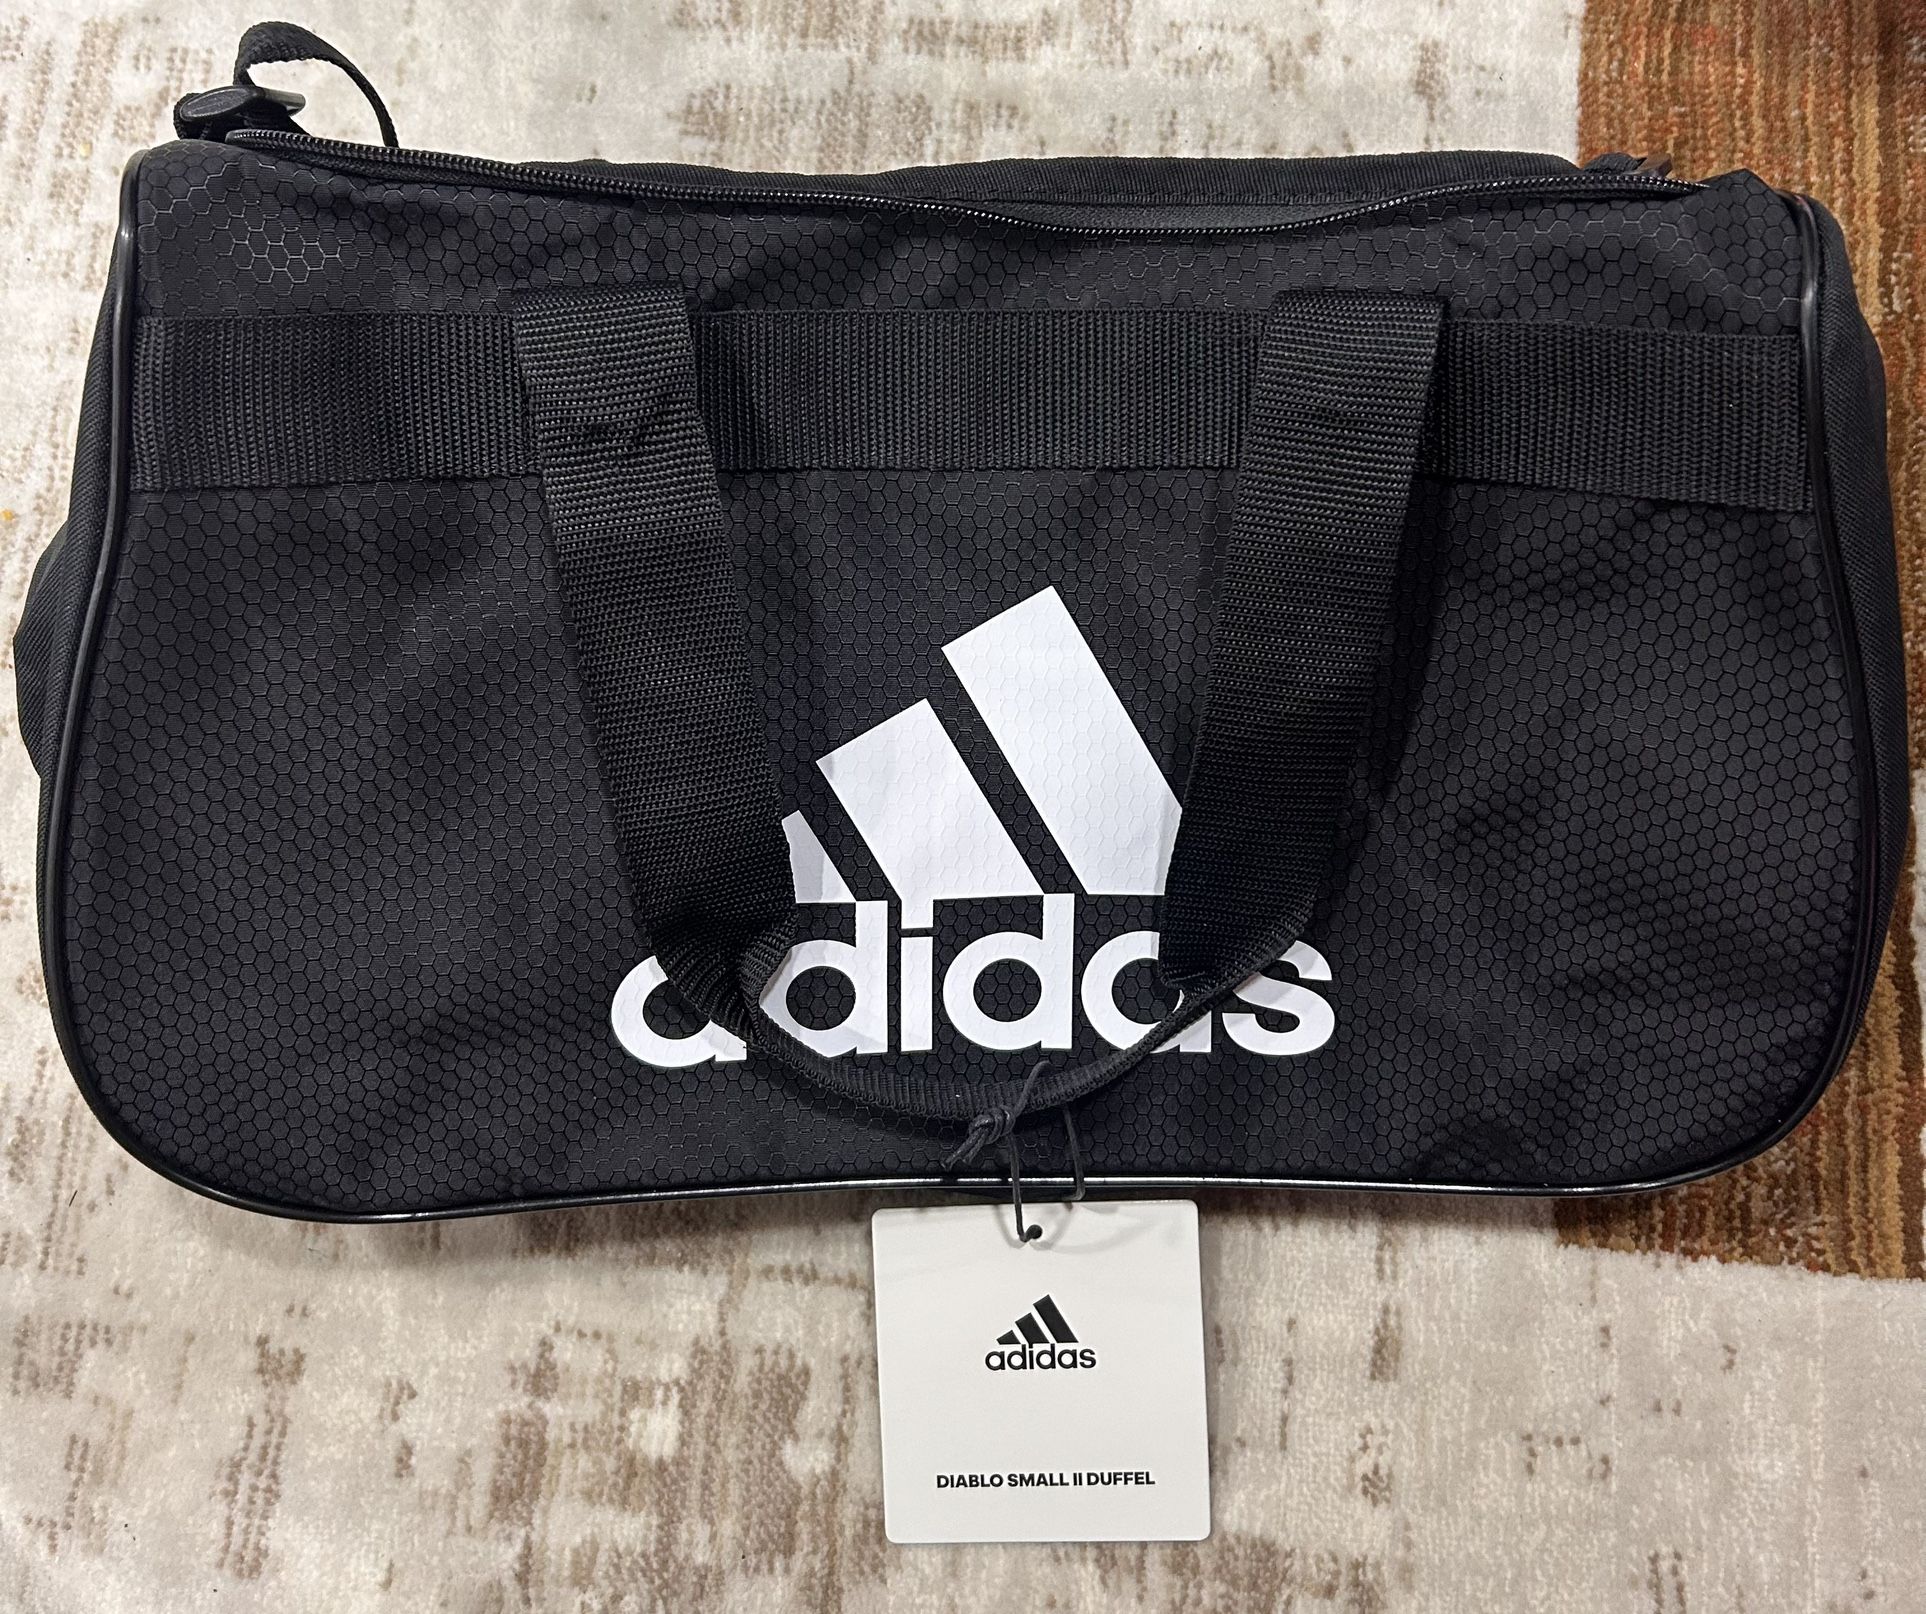 Adidas Small Duffle Bag